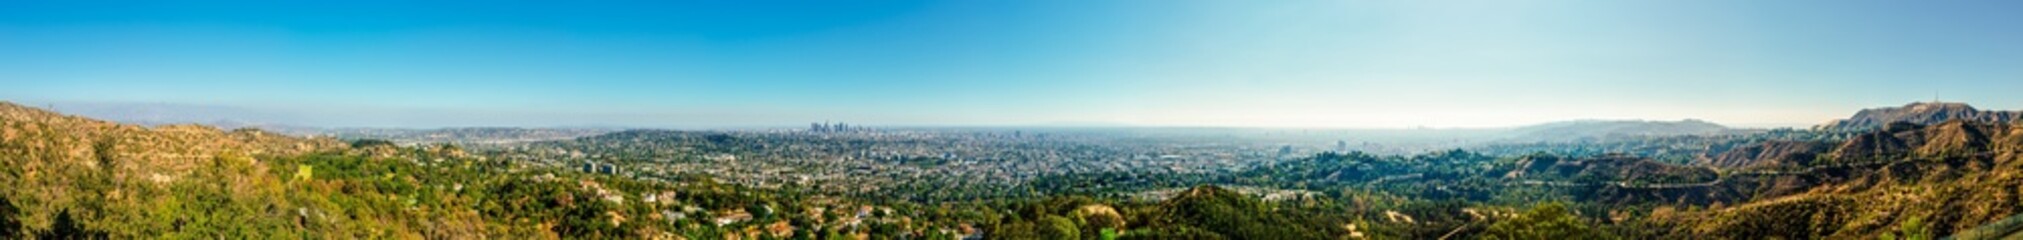 Fototapeta na wymiar Panorama Los Angeles - Hollywood Hills